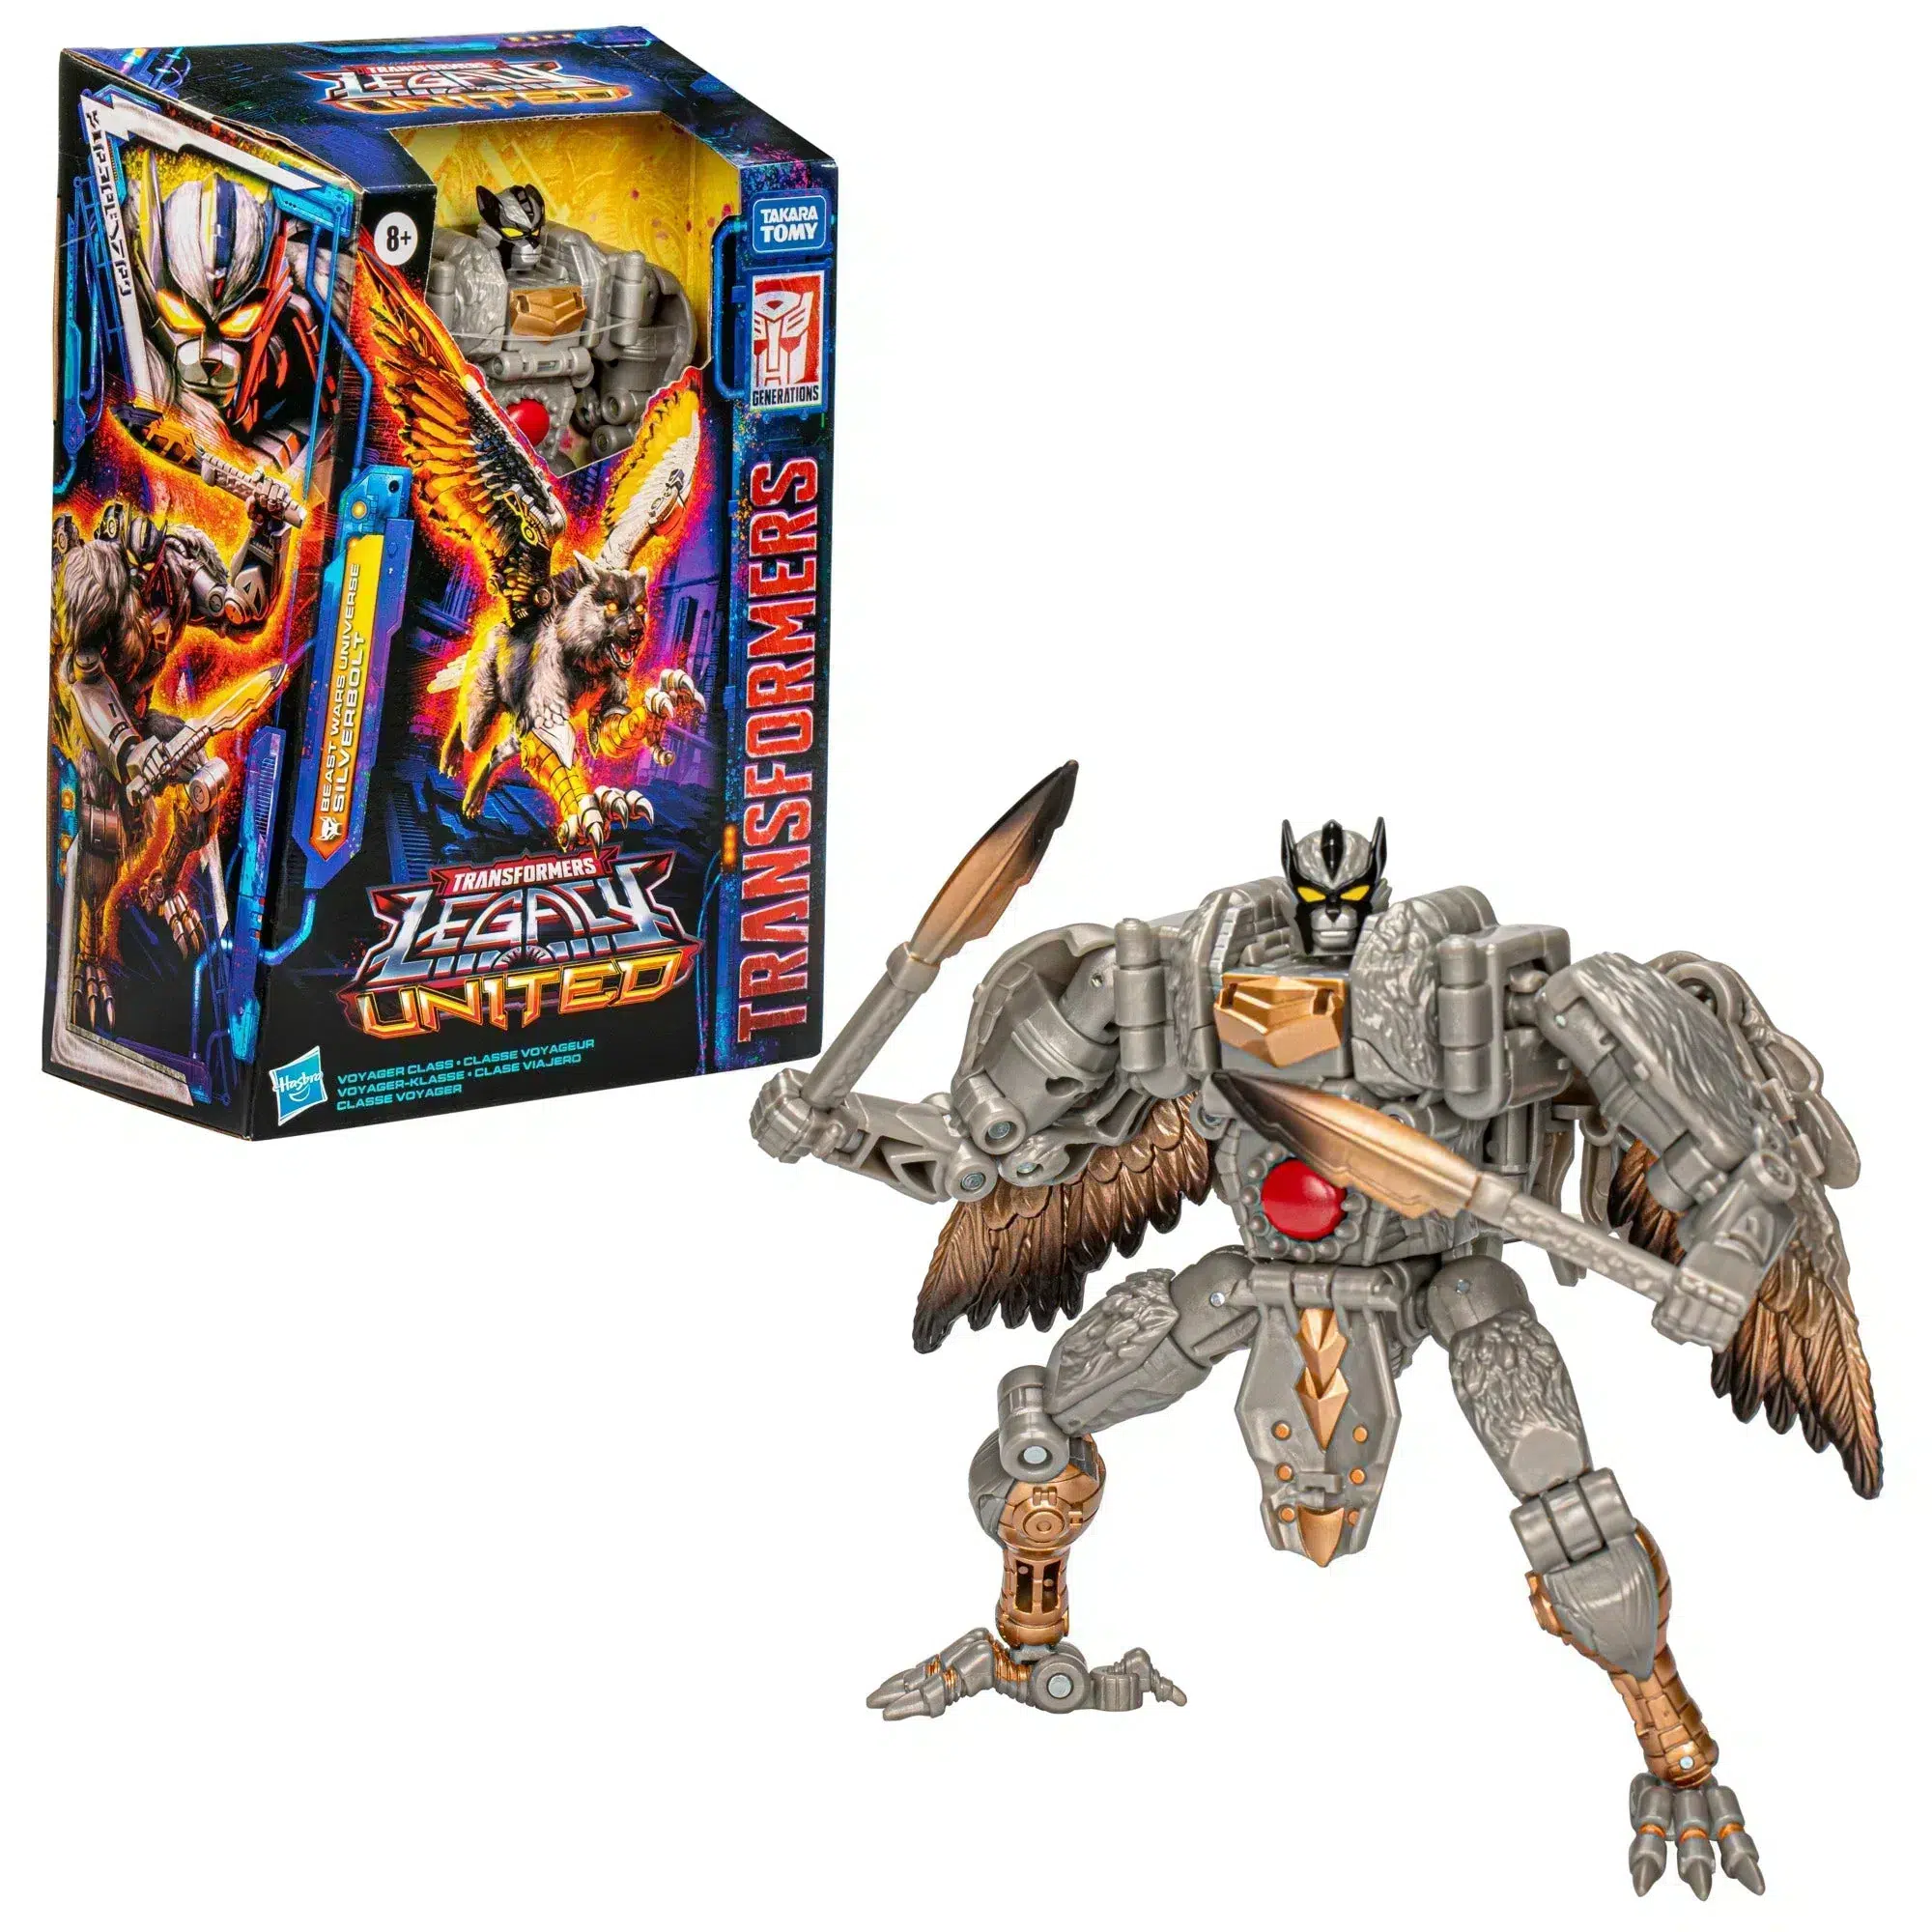 Transformers Legado Unido Beast Wars Universo Silverbolt 4